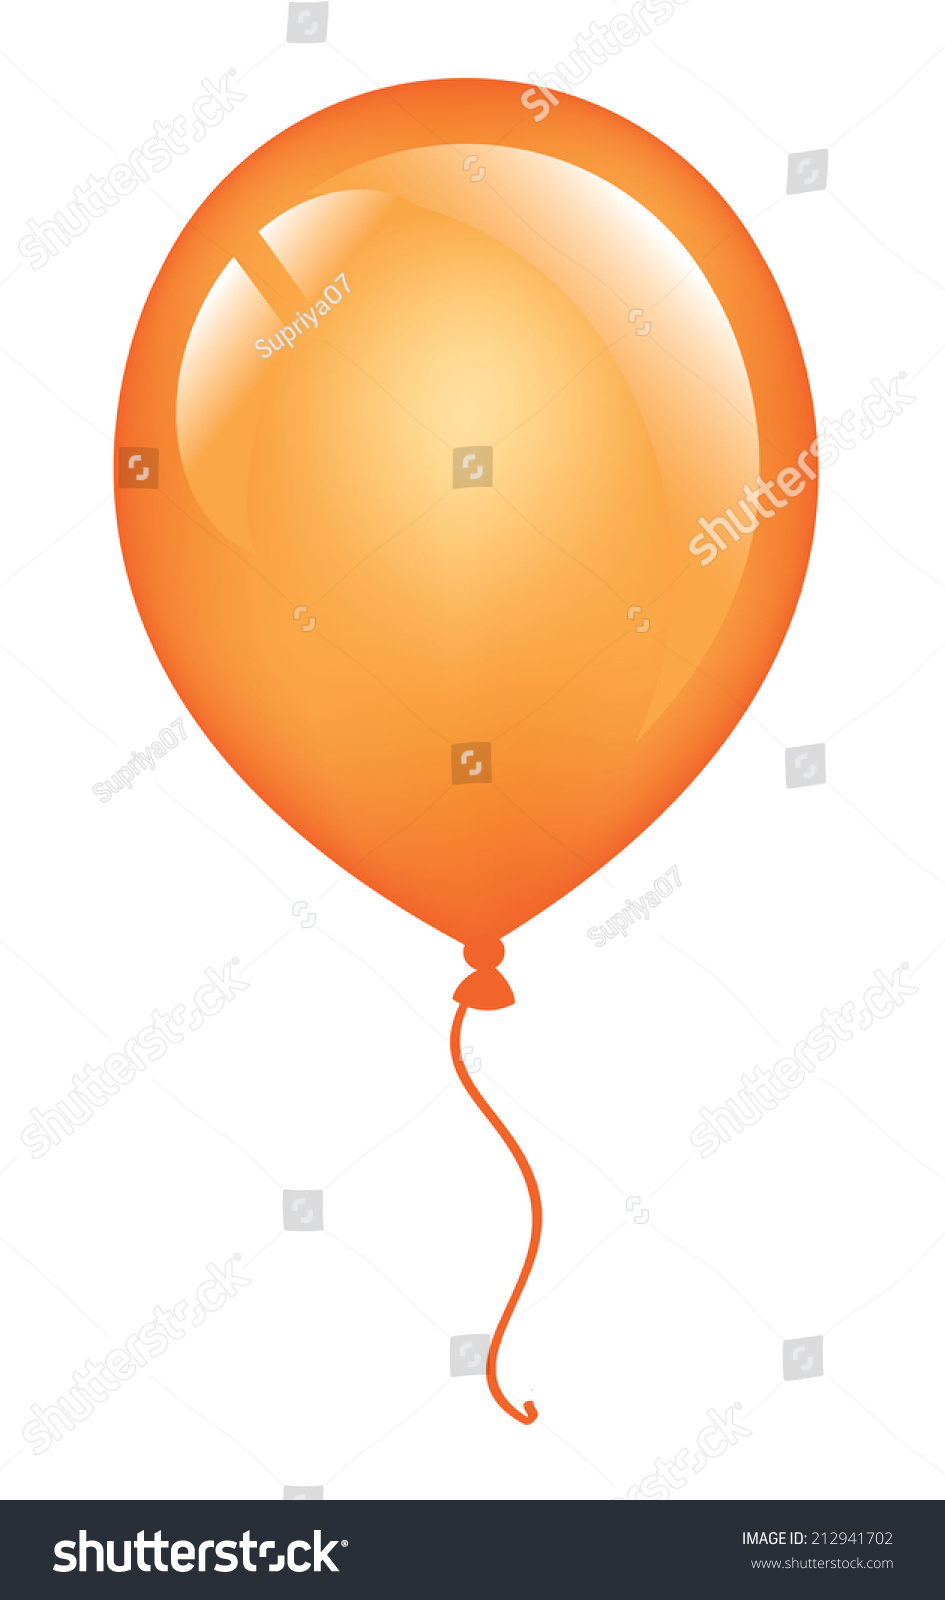 Orange Vector Balloon - 212941702 : Shutterstock